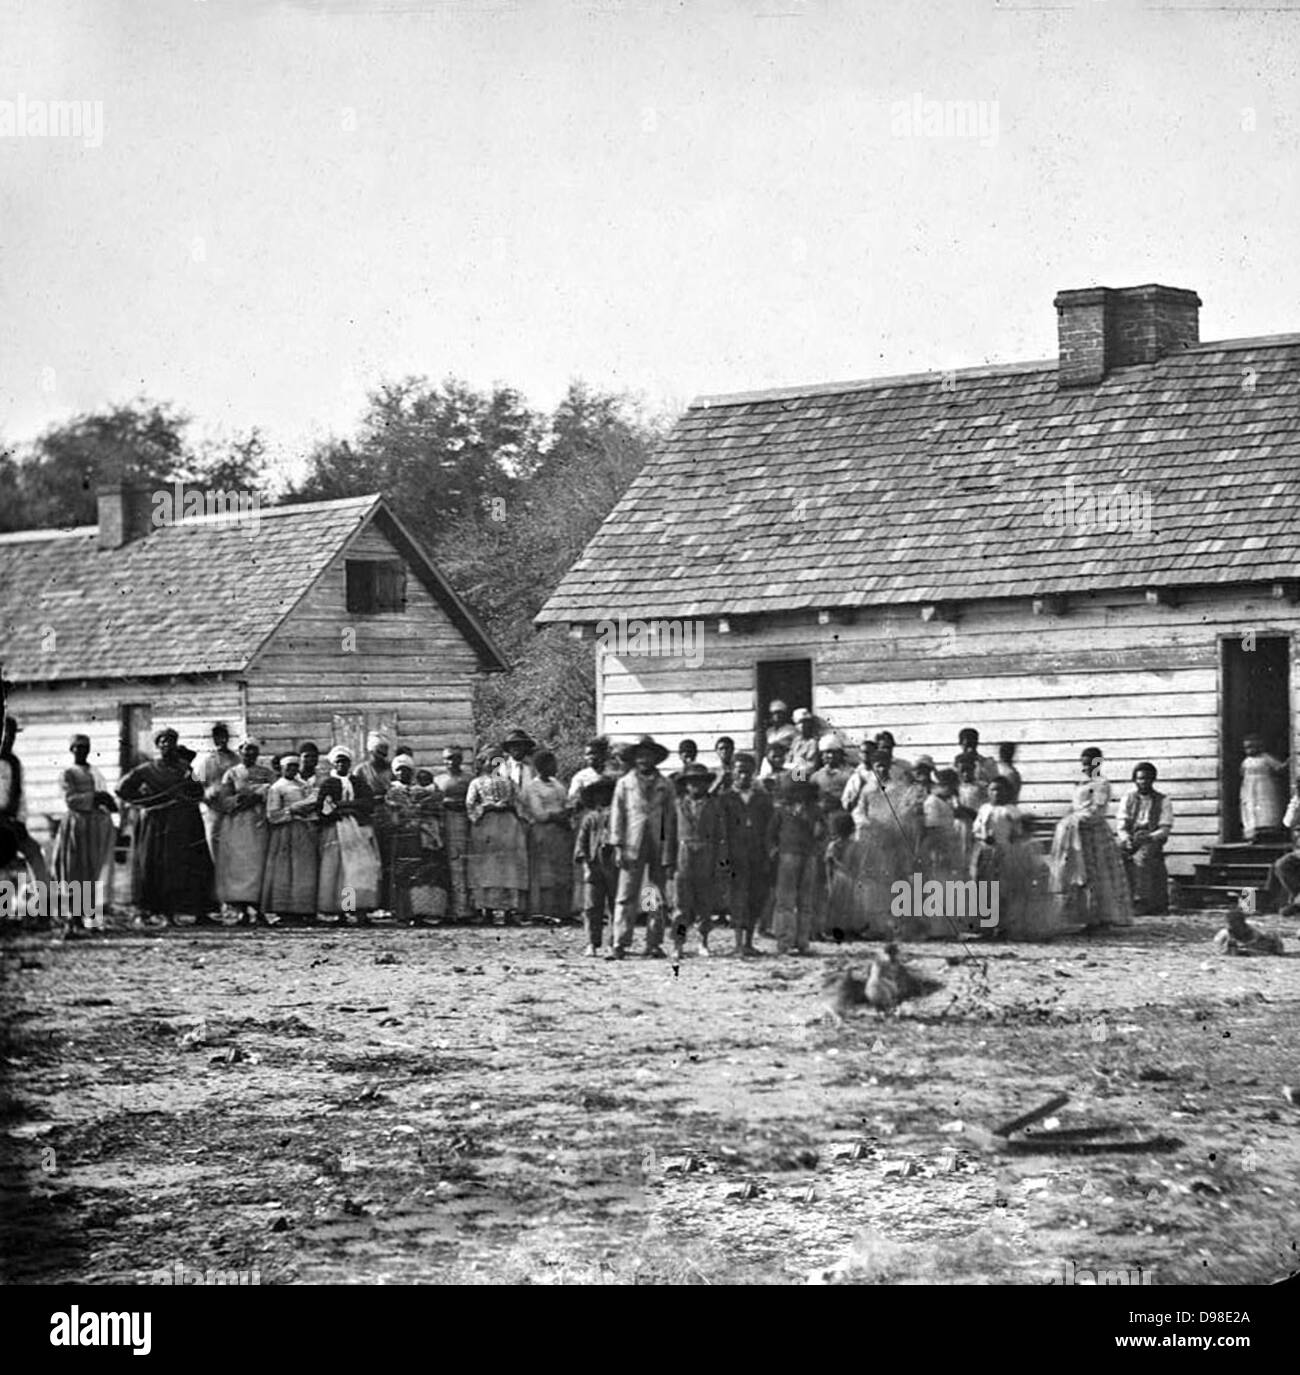 Plantation slaves gathered outdside their huts, Virginia, America. Photograph c1860. Stock Photo